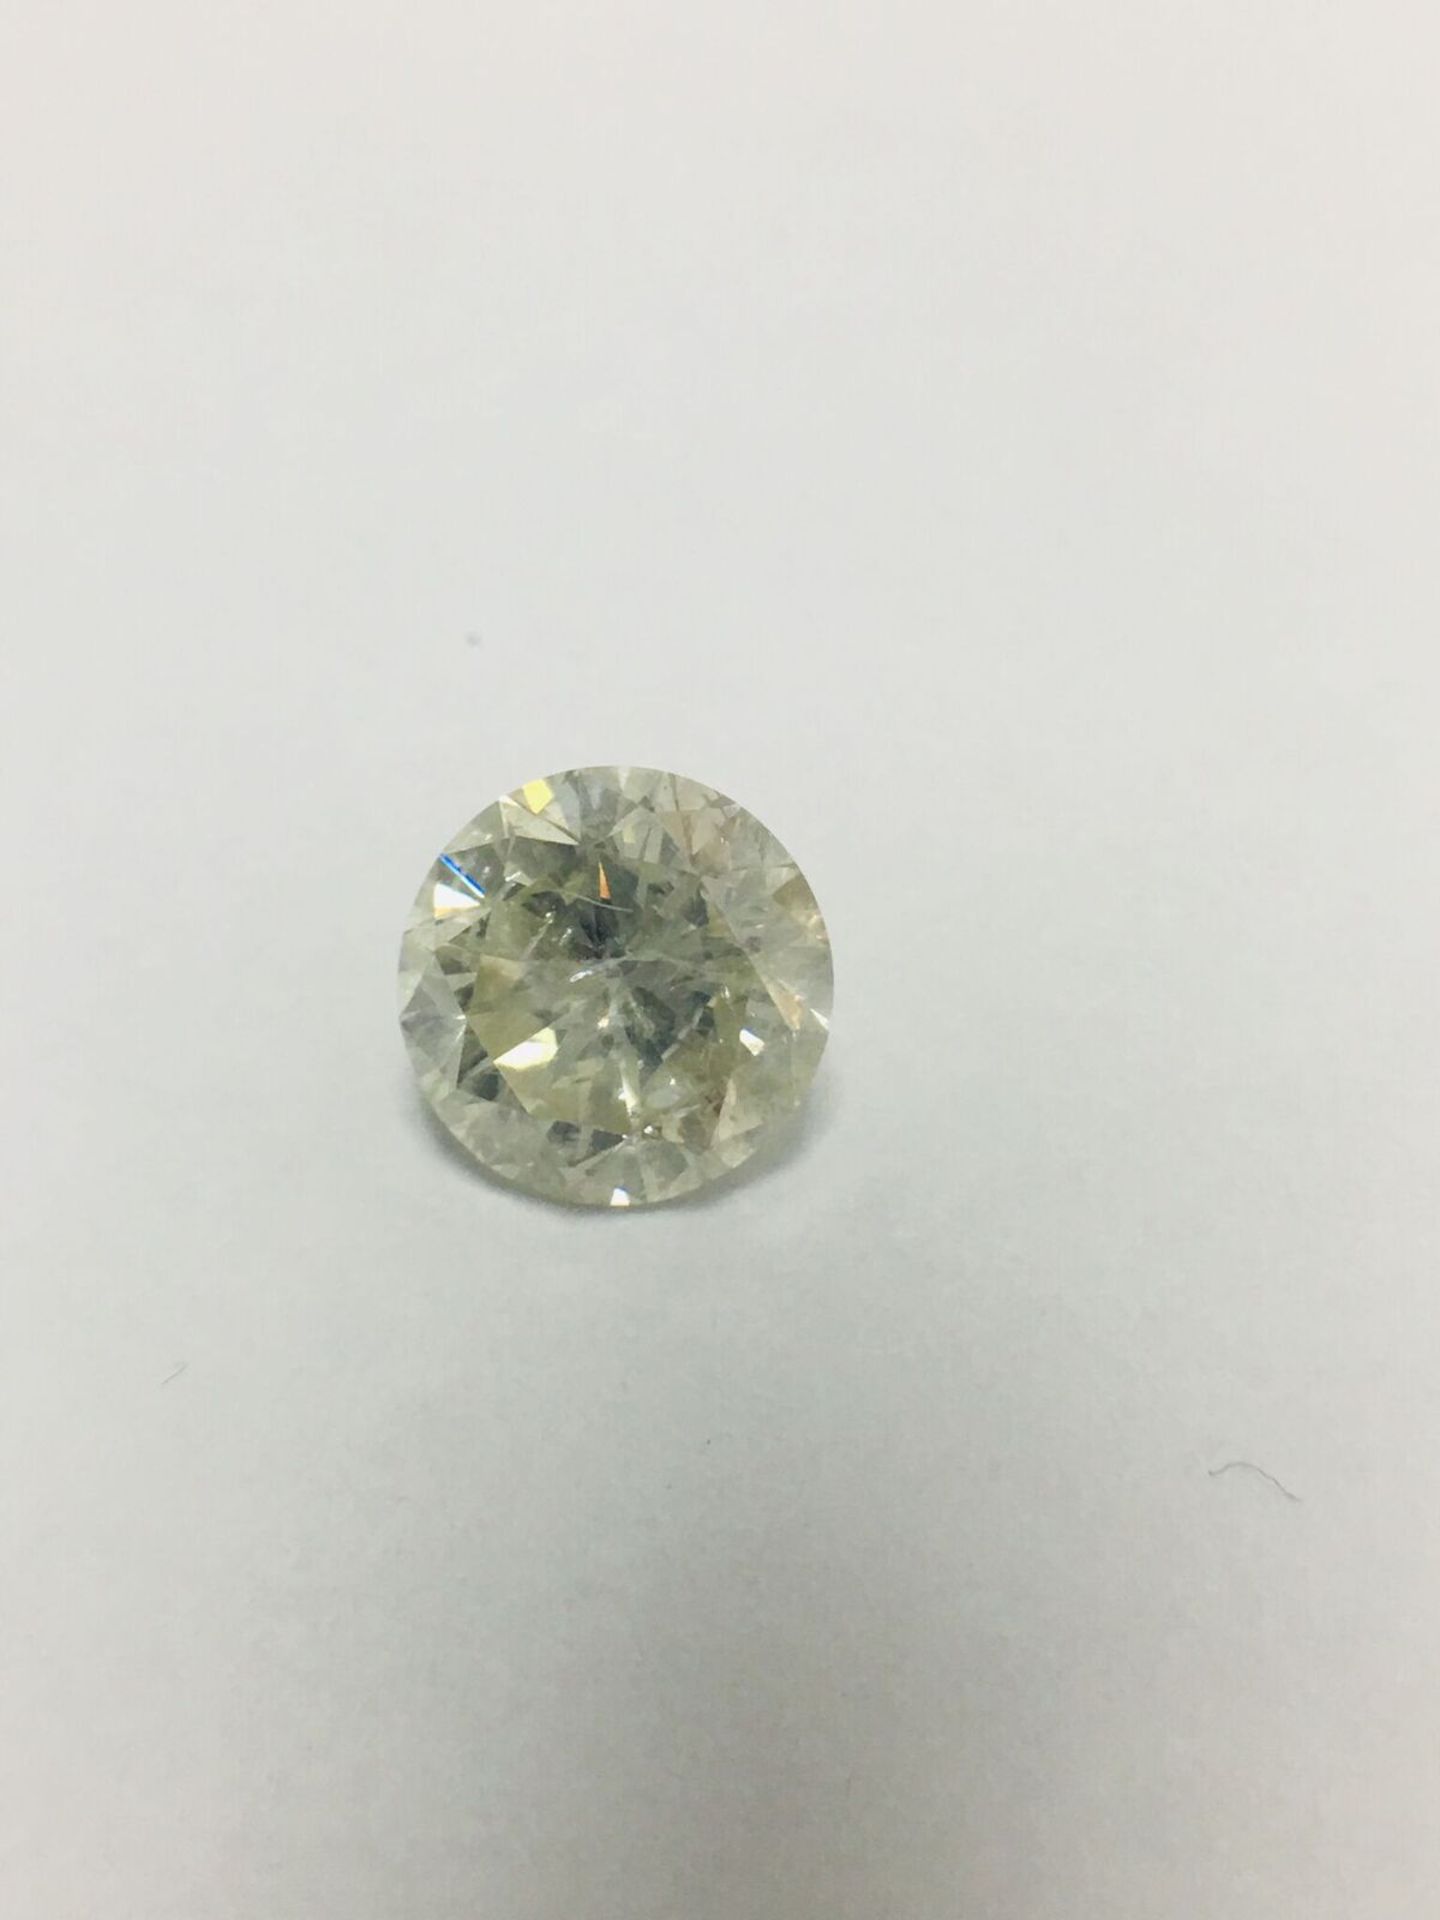 2.29Ct Natural Diamond - Image 3 of 3